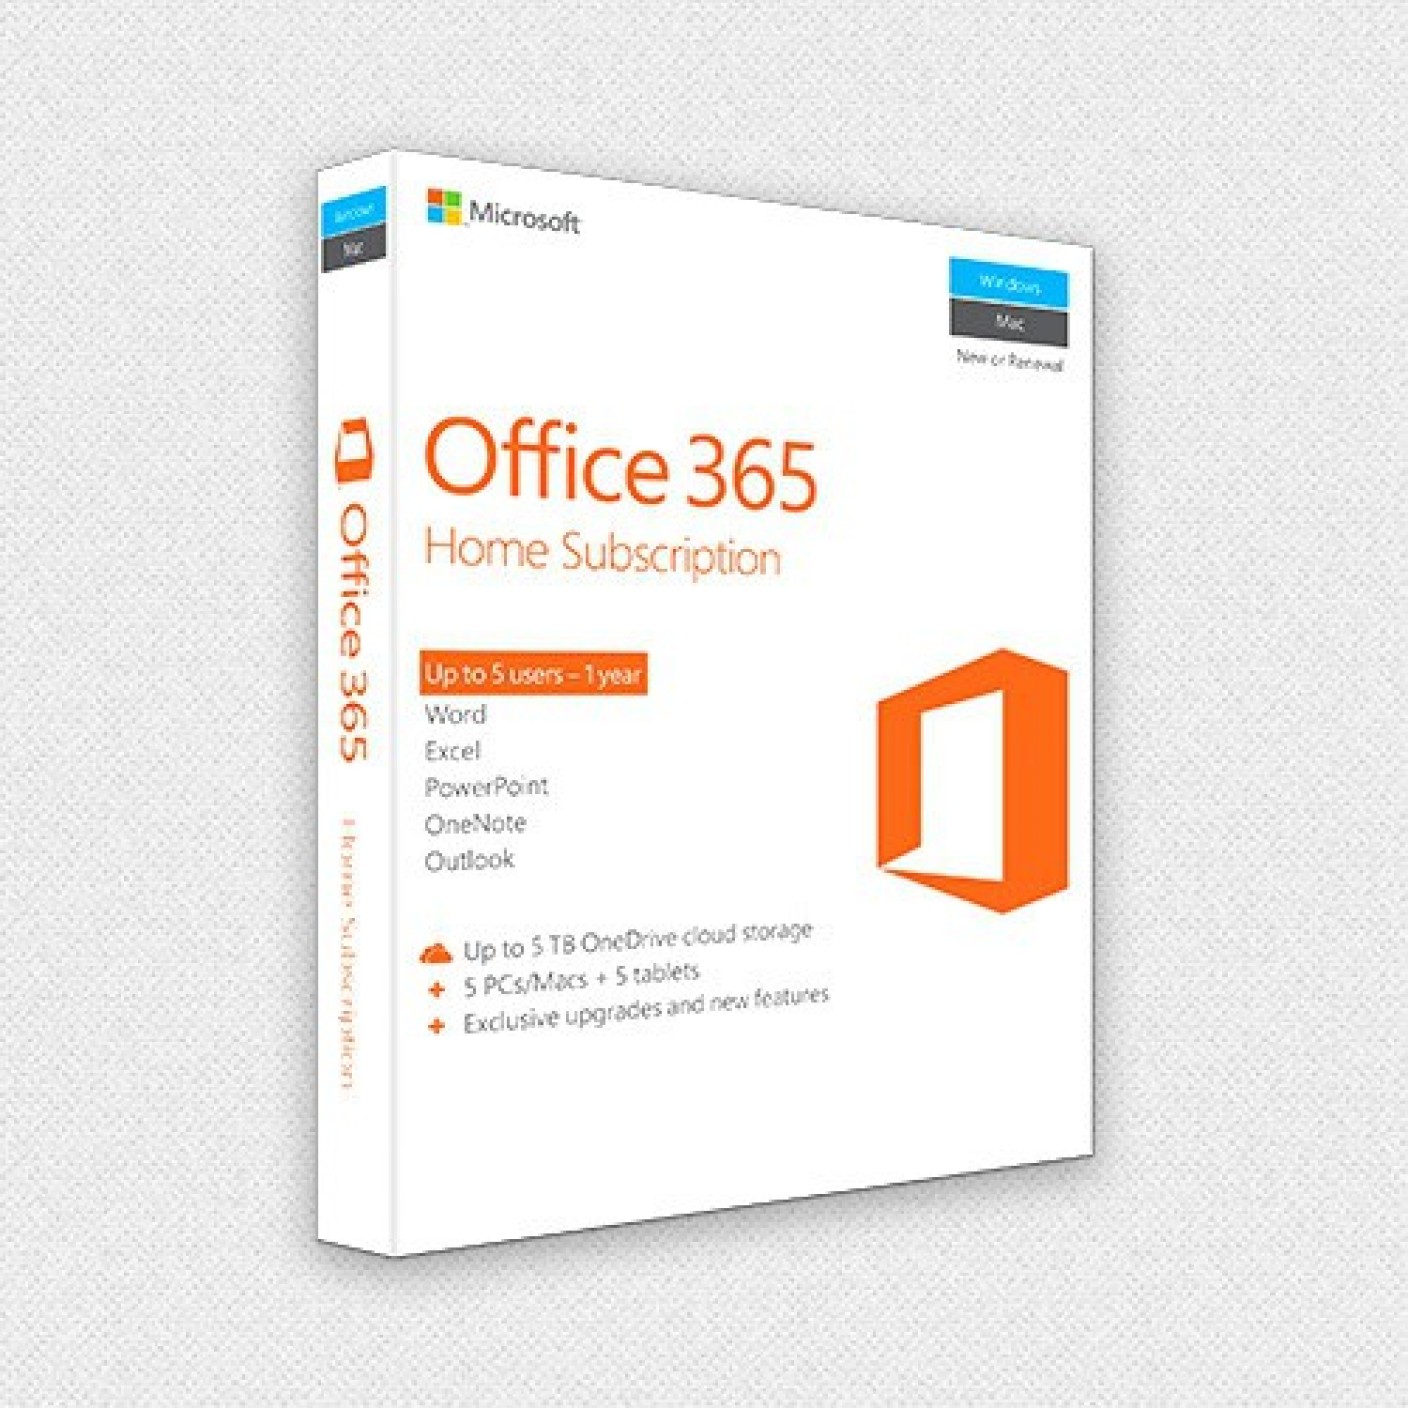 office 365 for windows 7 32 bit